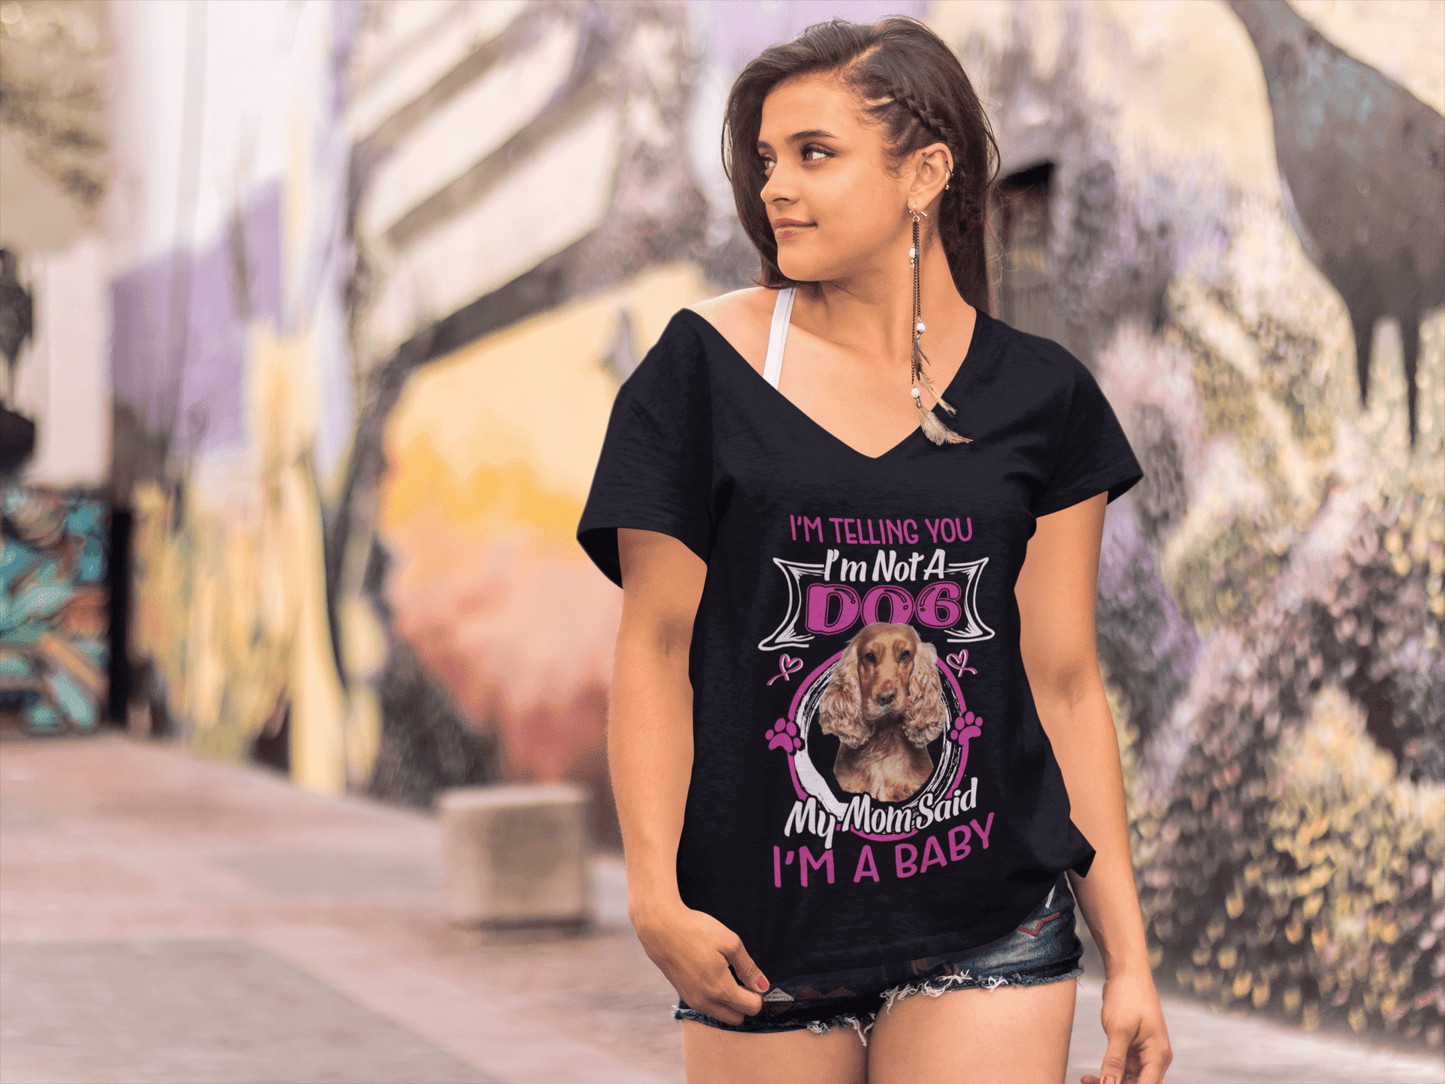 ULTRABASIC Women's T-Shirt I'm Telling You I'm Not a Cocker Spaniel - My Mom Said I'm a Baby - Cute Puppy Dog Lover Tee Shirt